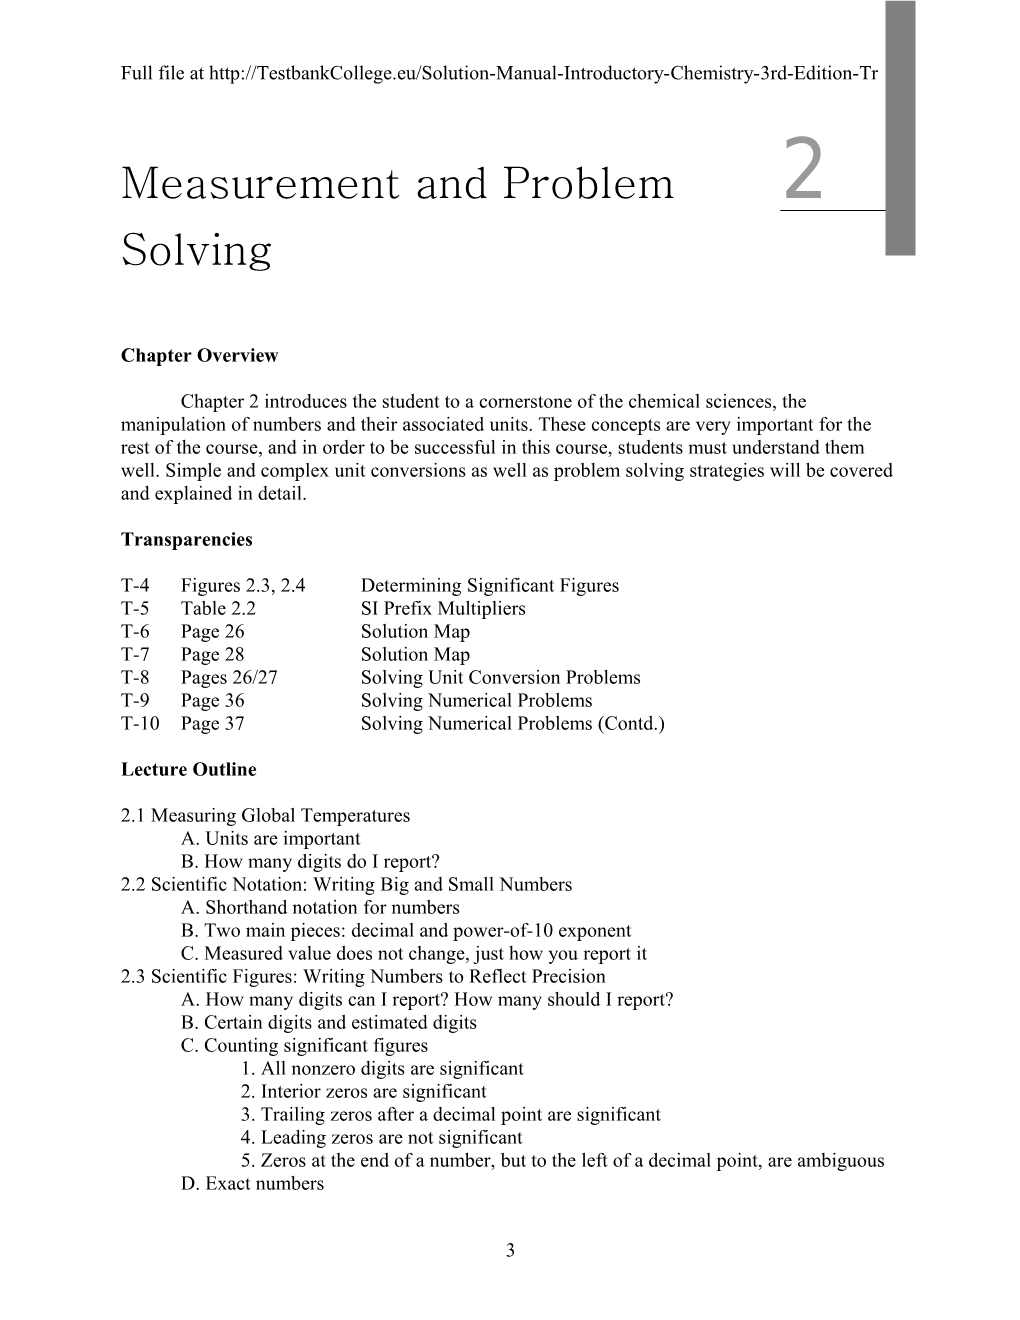 Measurement and Problem 2